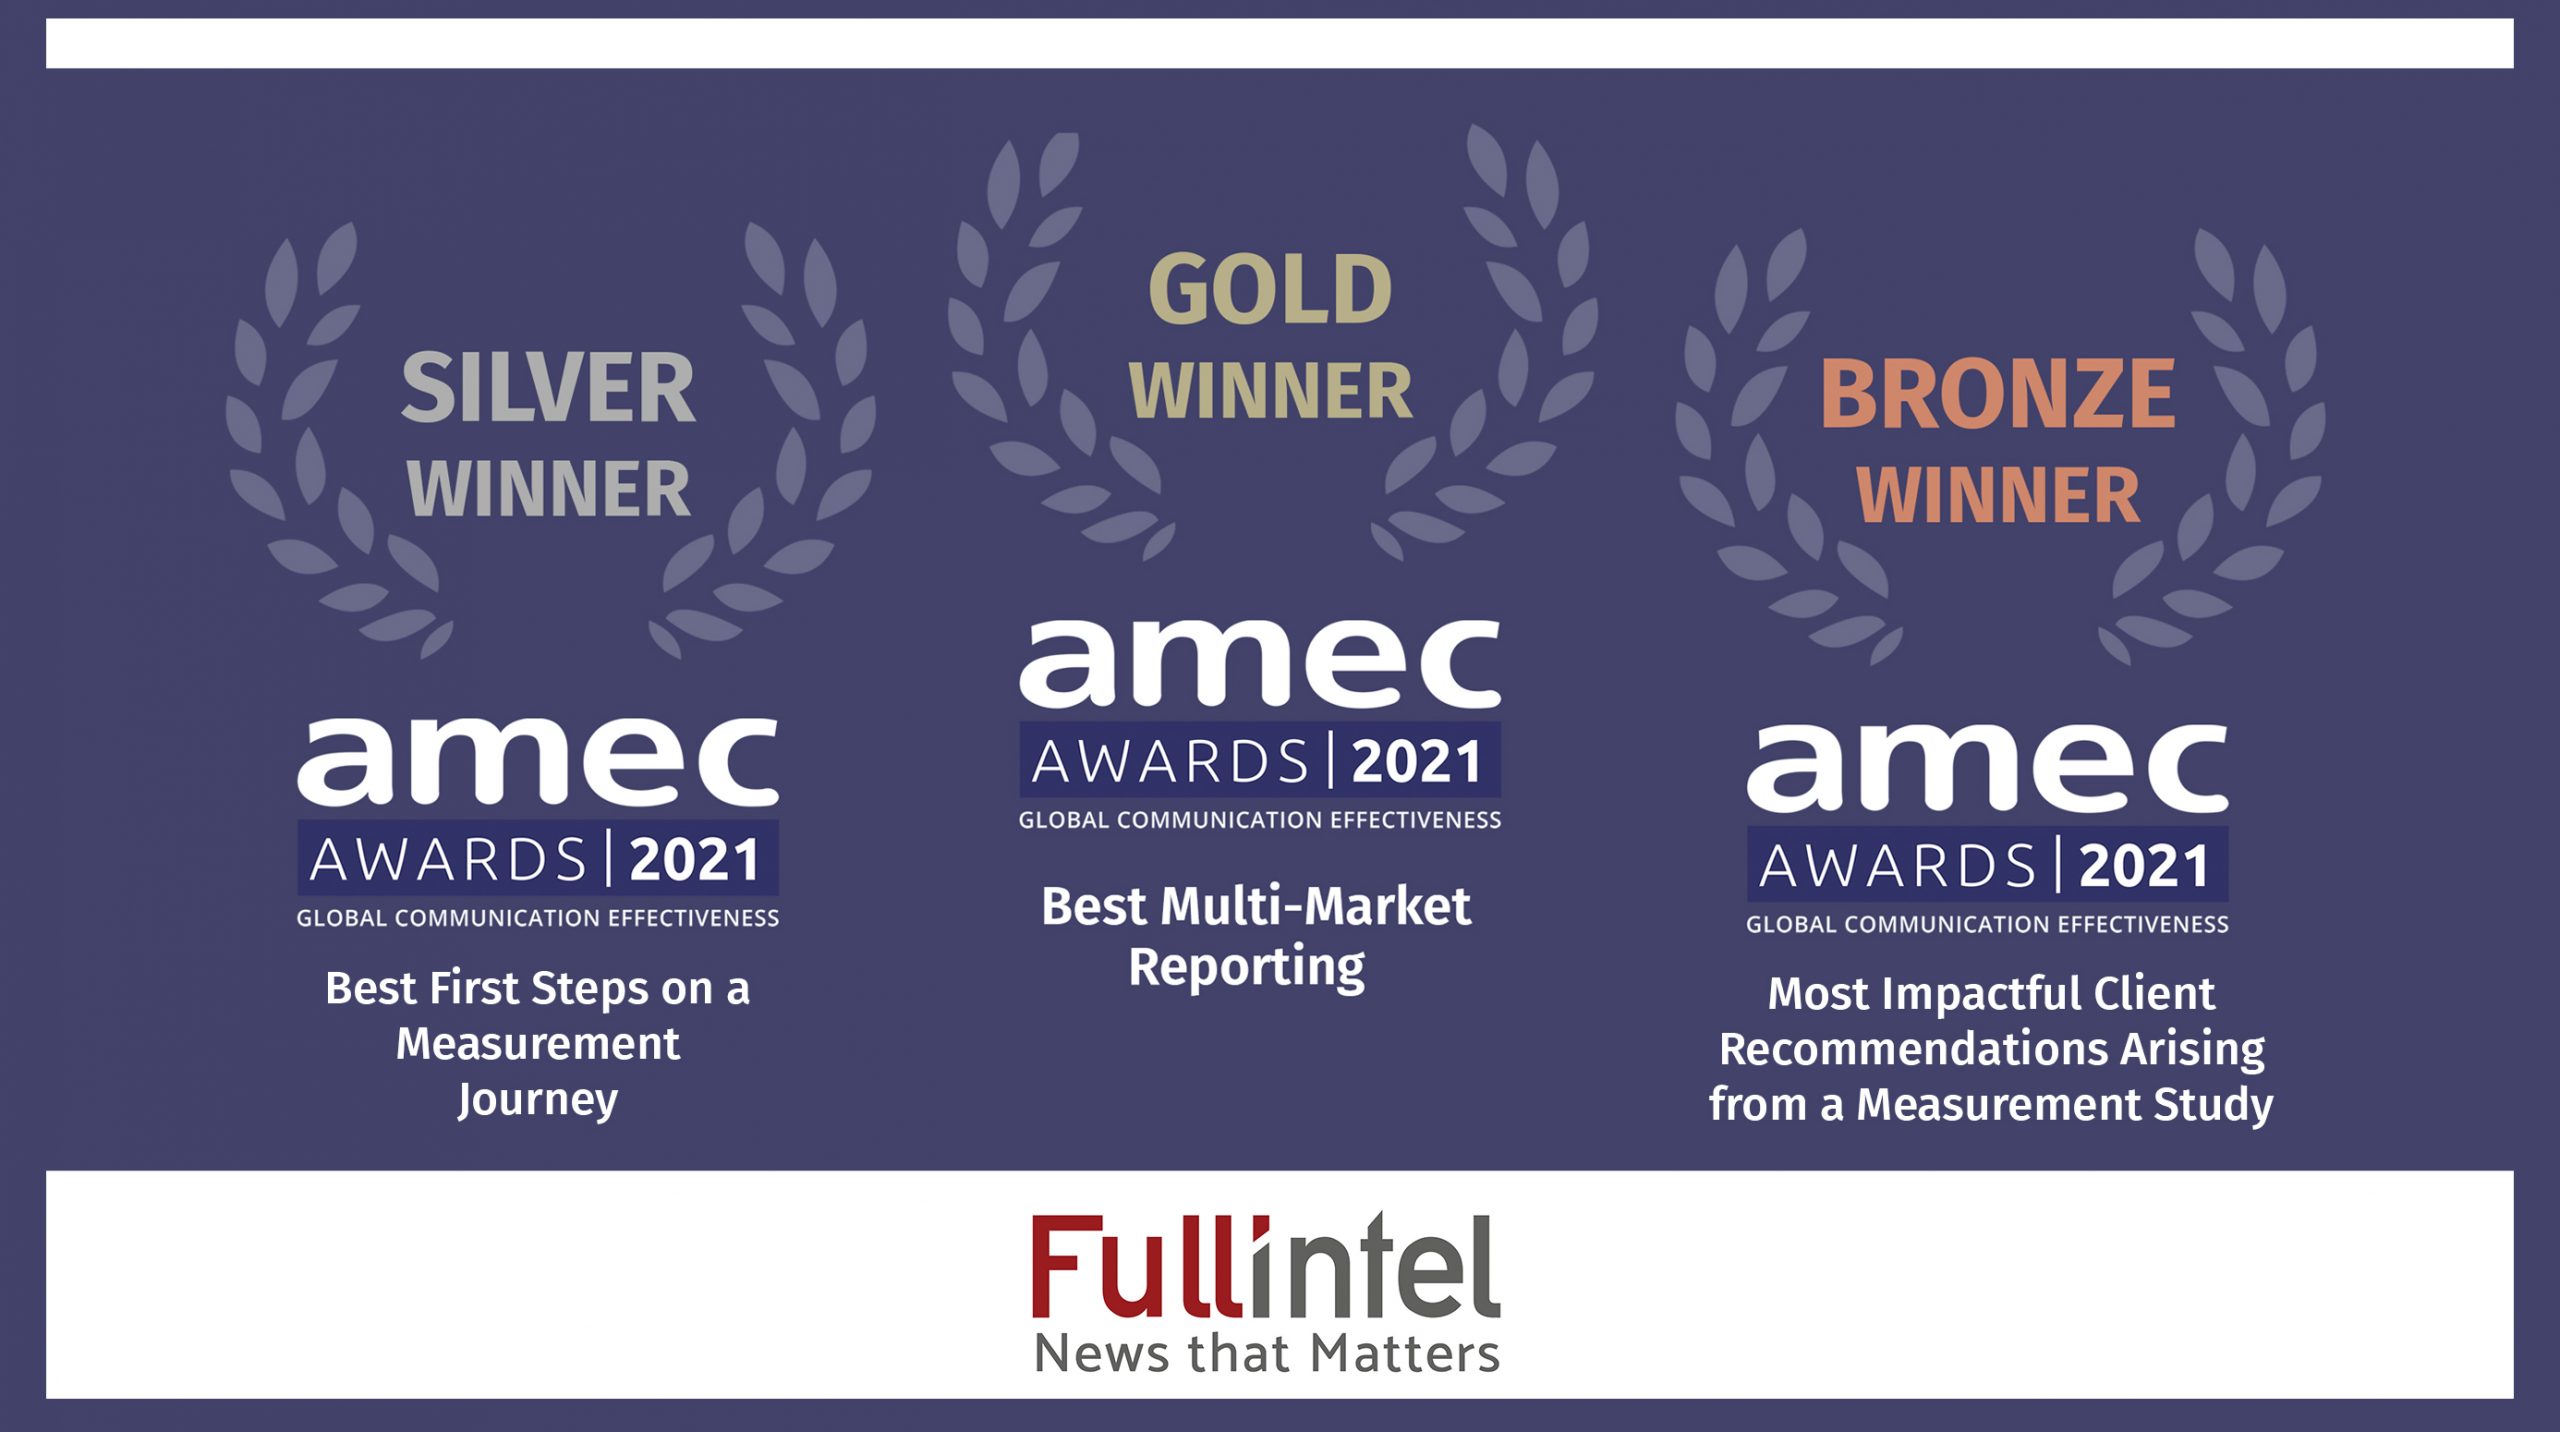 AMEC Awards